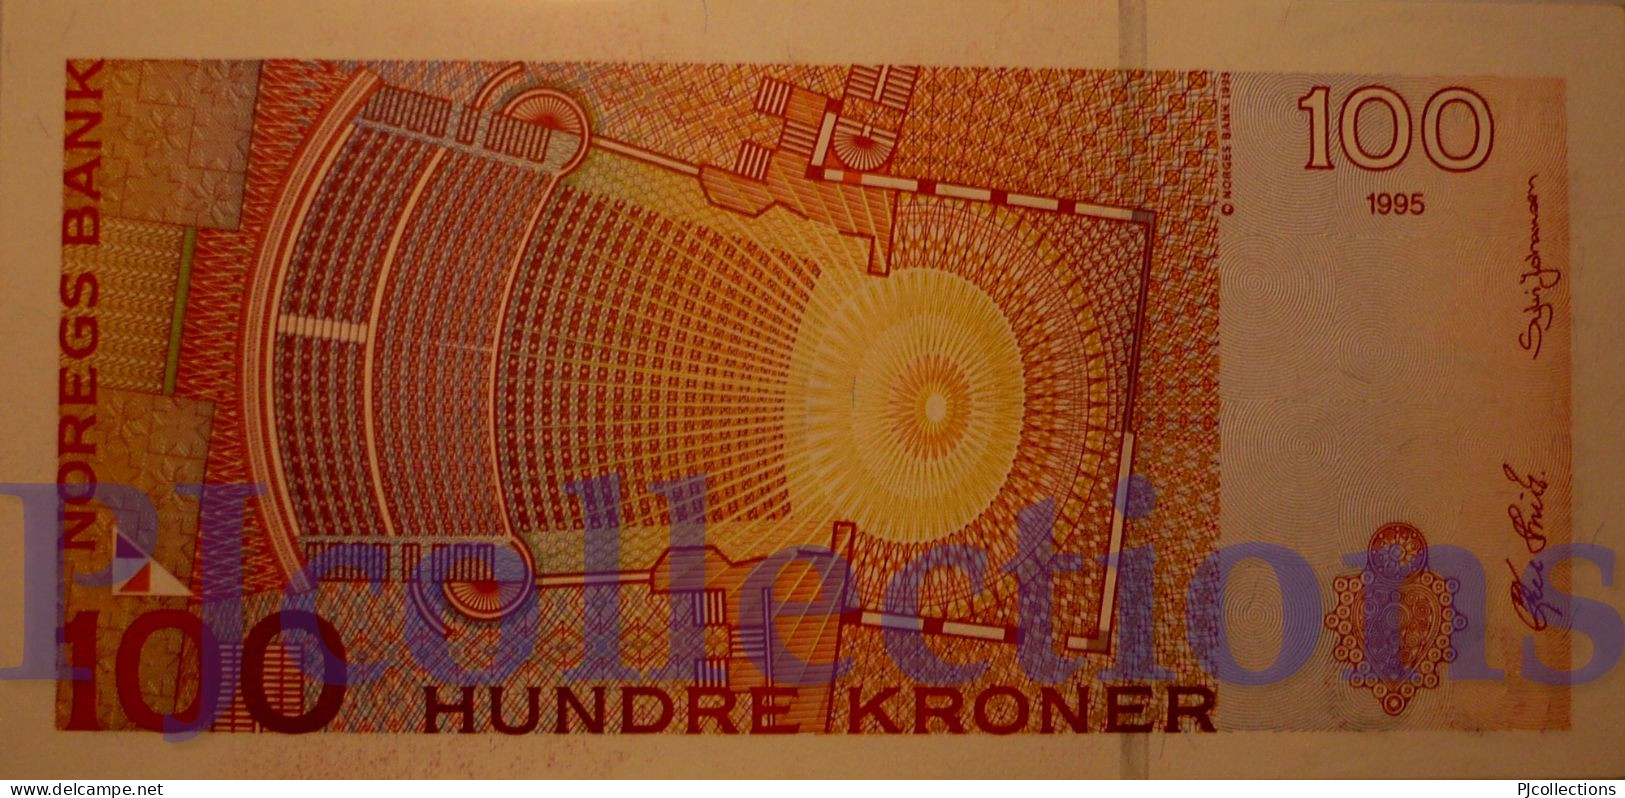 NORWAY 100 KRONER 1995 PICK 47a AU/UNC - Norway